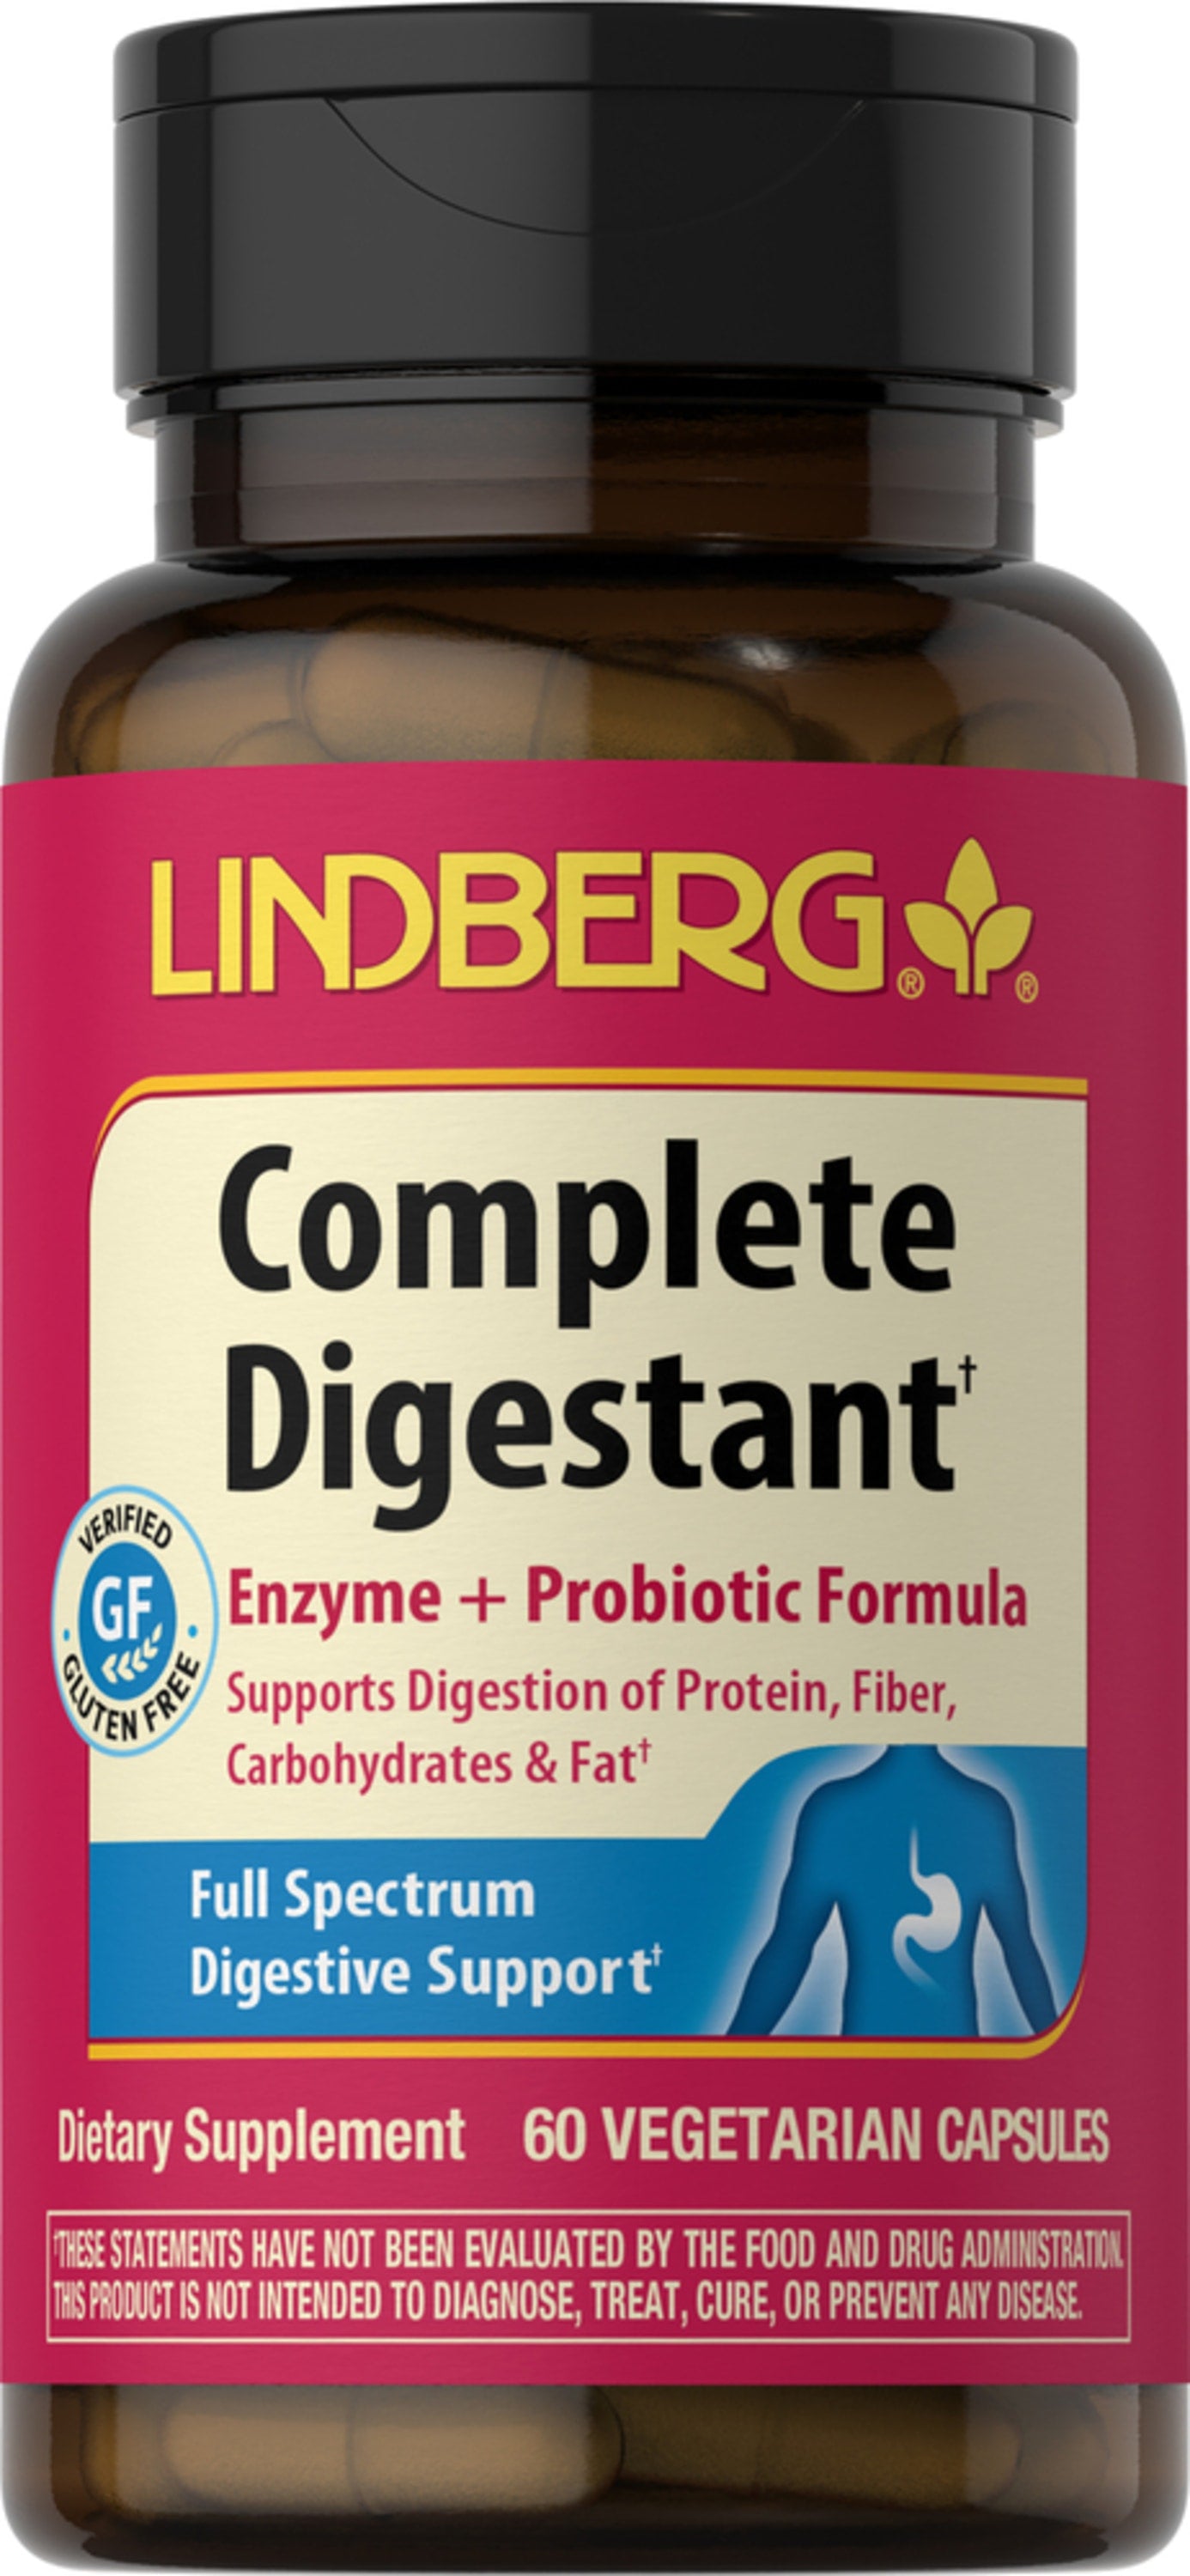 Complete Digestant Multi Enzyme + Probiotic, 60 Vegetarian Capsules